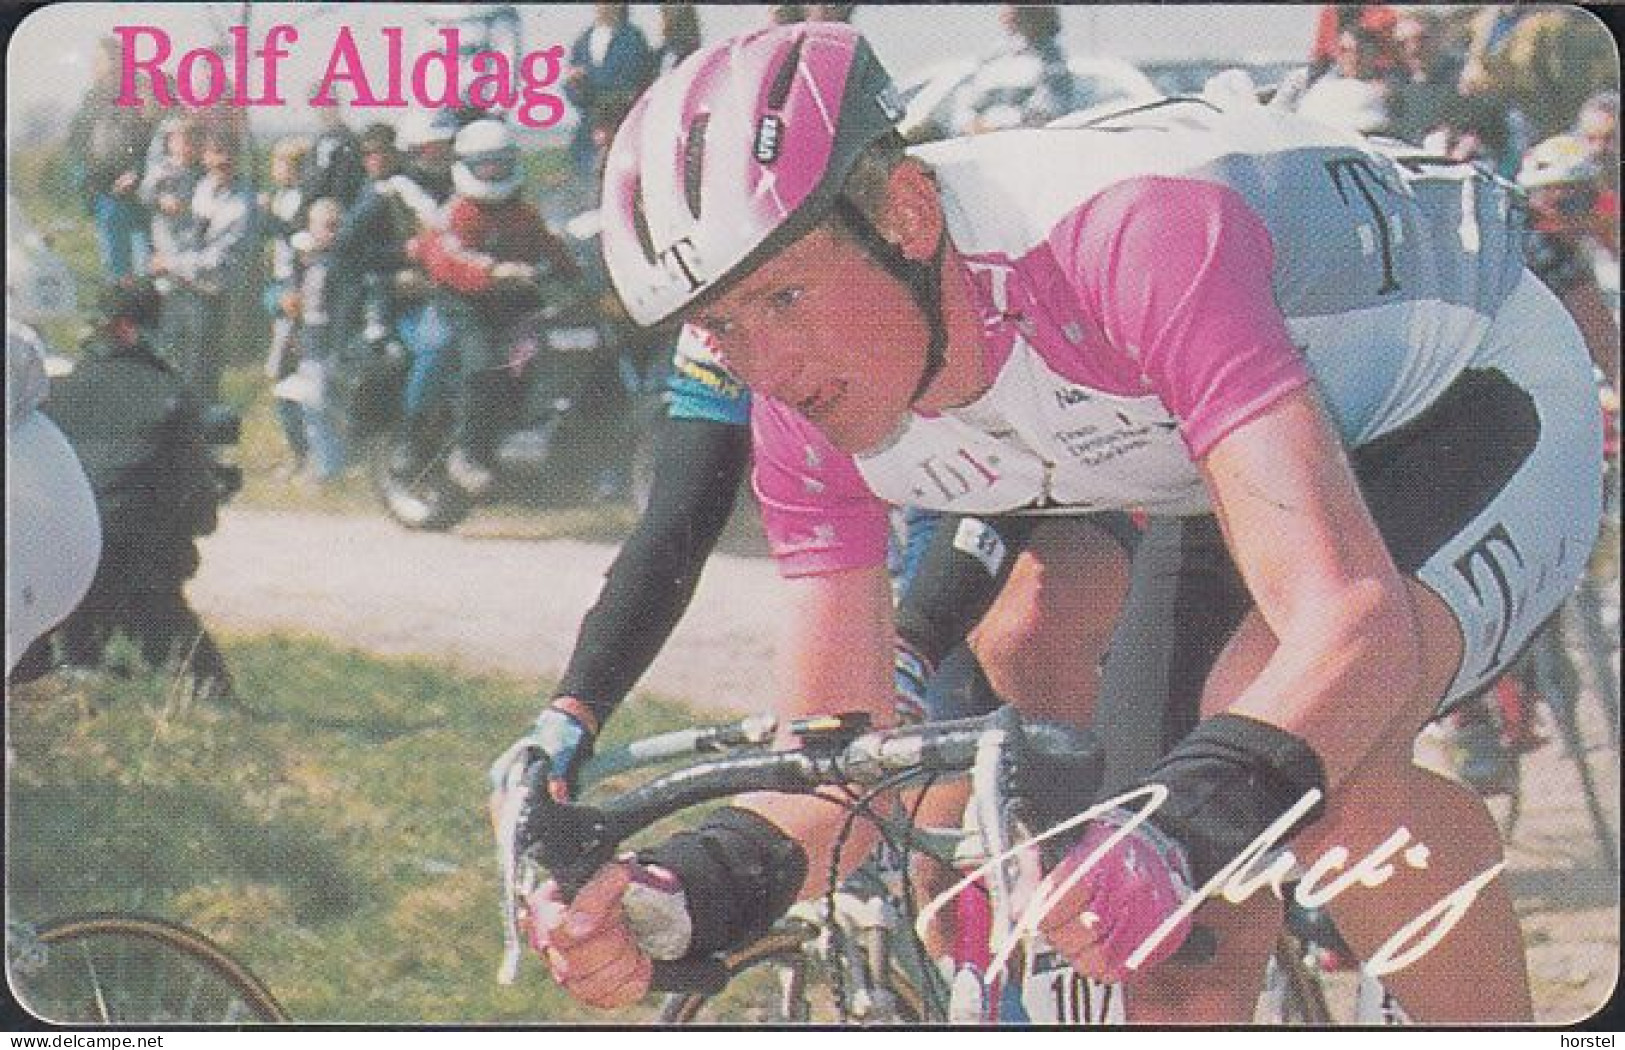 Germany P17/97 Team Telekom - Tour De France '97 - Rolf Aldag DD:3708 - P & PD-Series: Schalterkarten Der Dt. Telekom